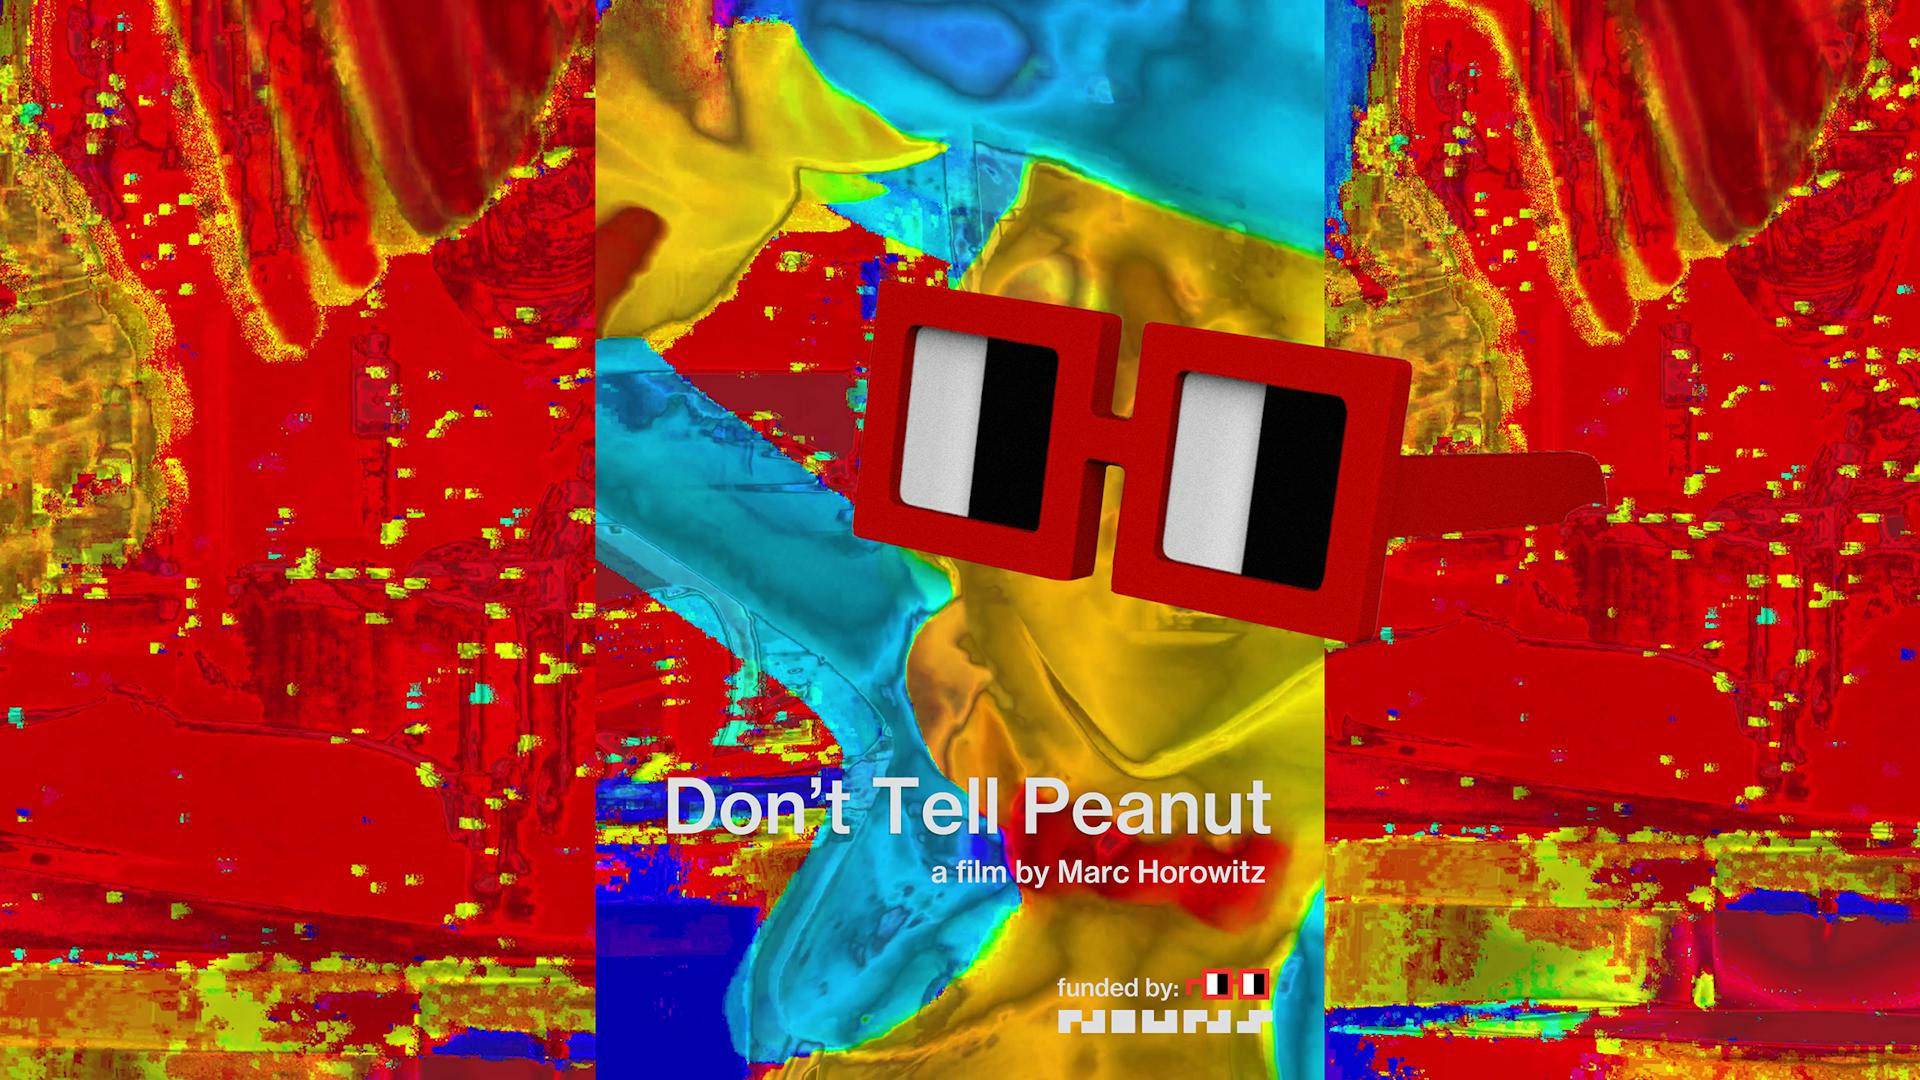 Nouns x Worst "Don't Tell Peanut" Trailer